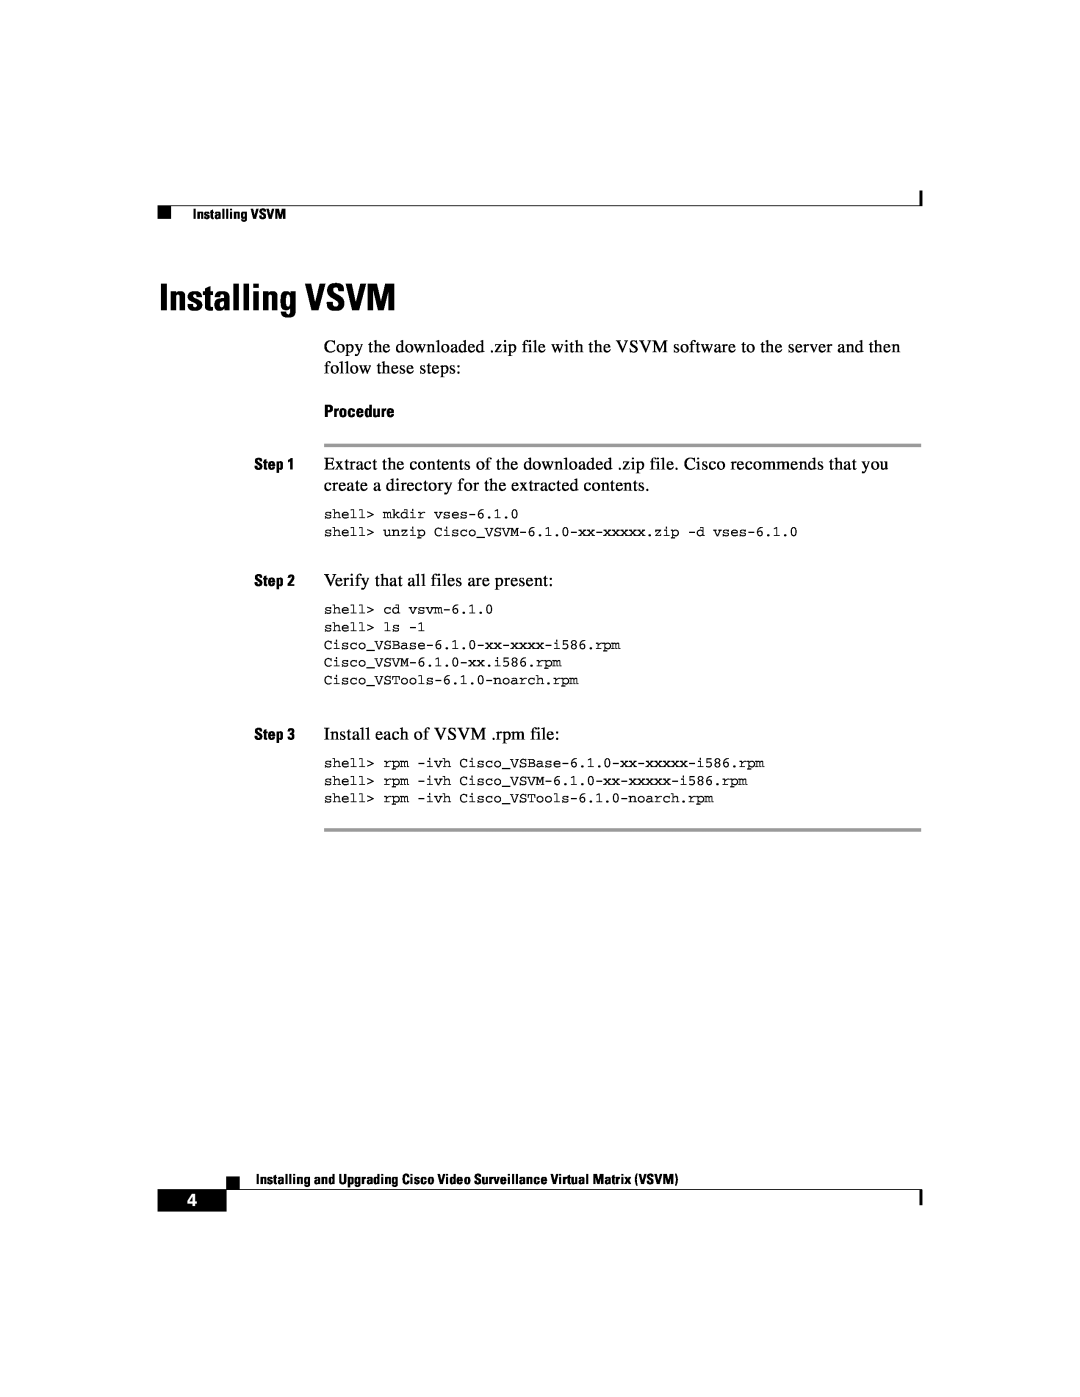 Cisco Systems manual Installing VSVM, Procedure 